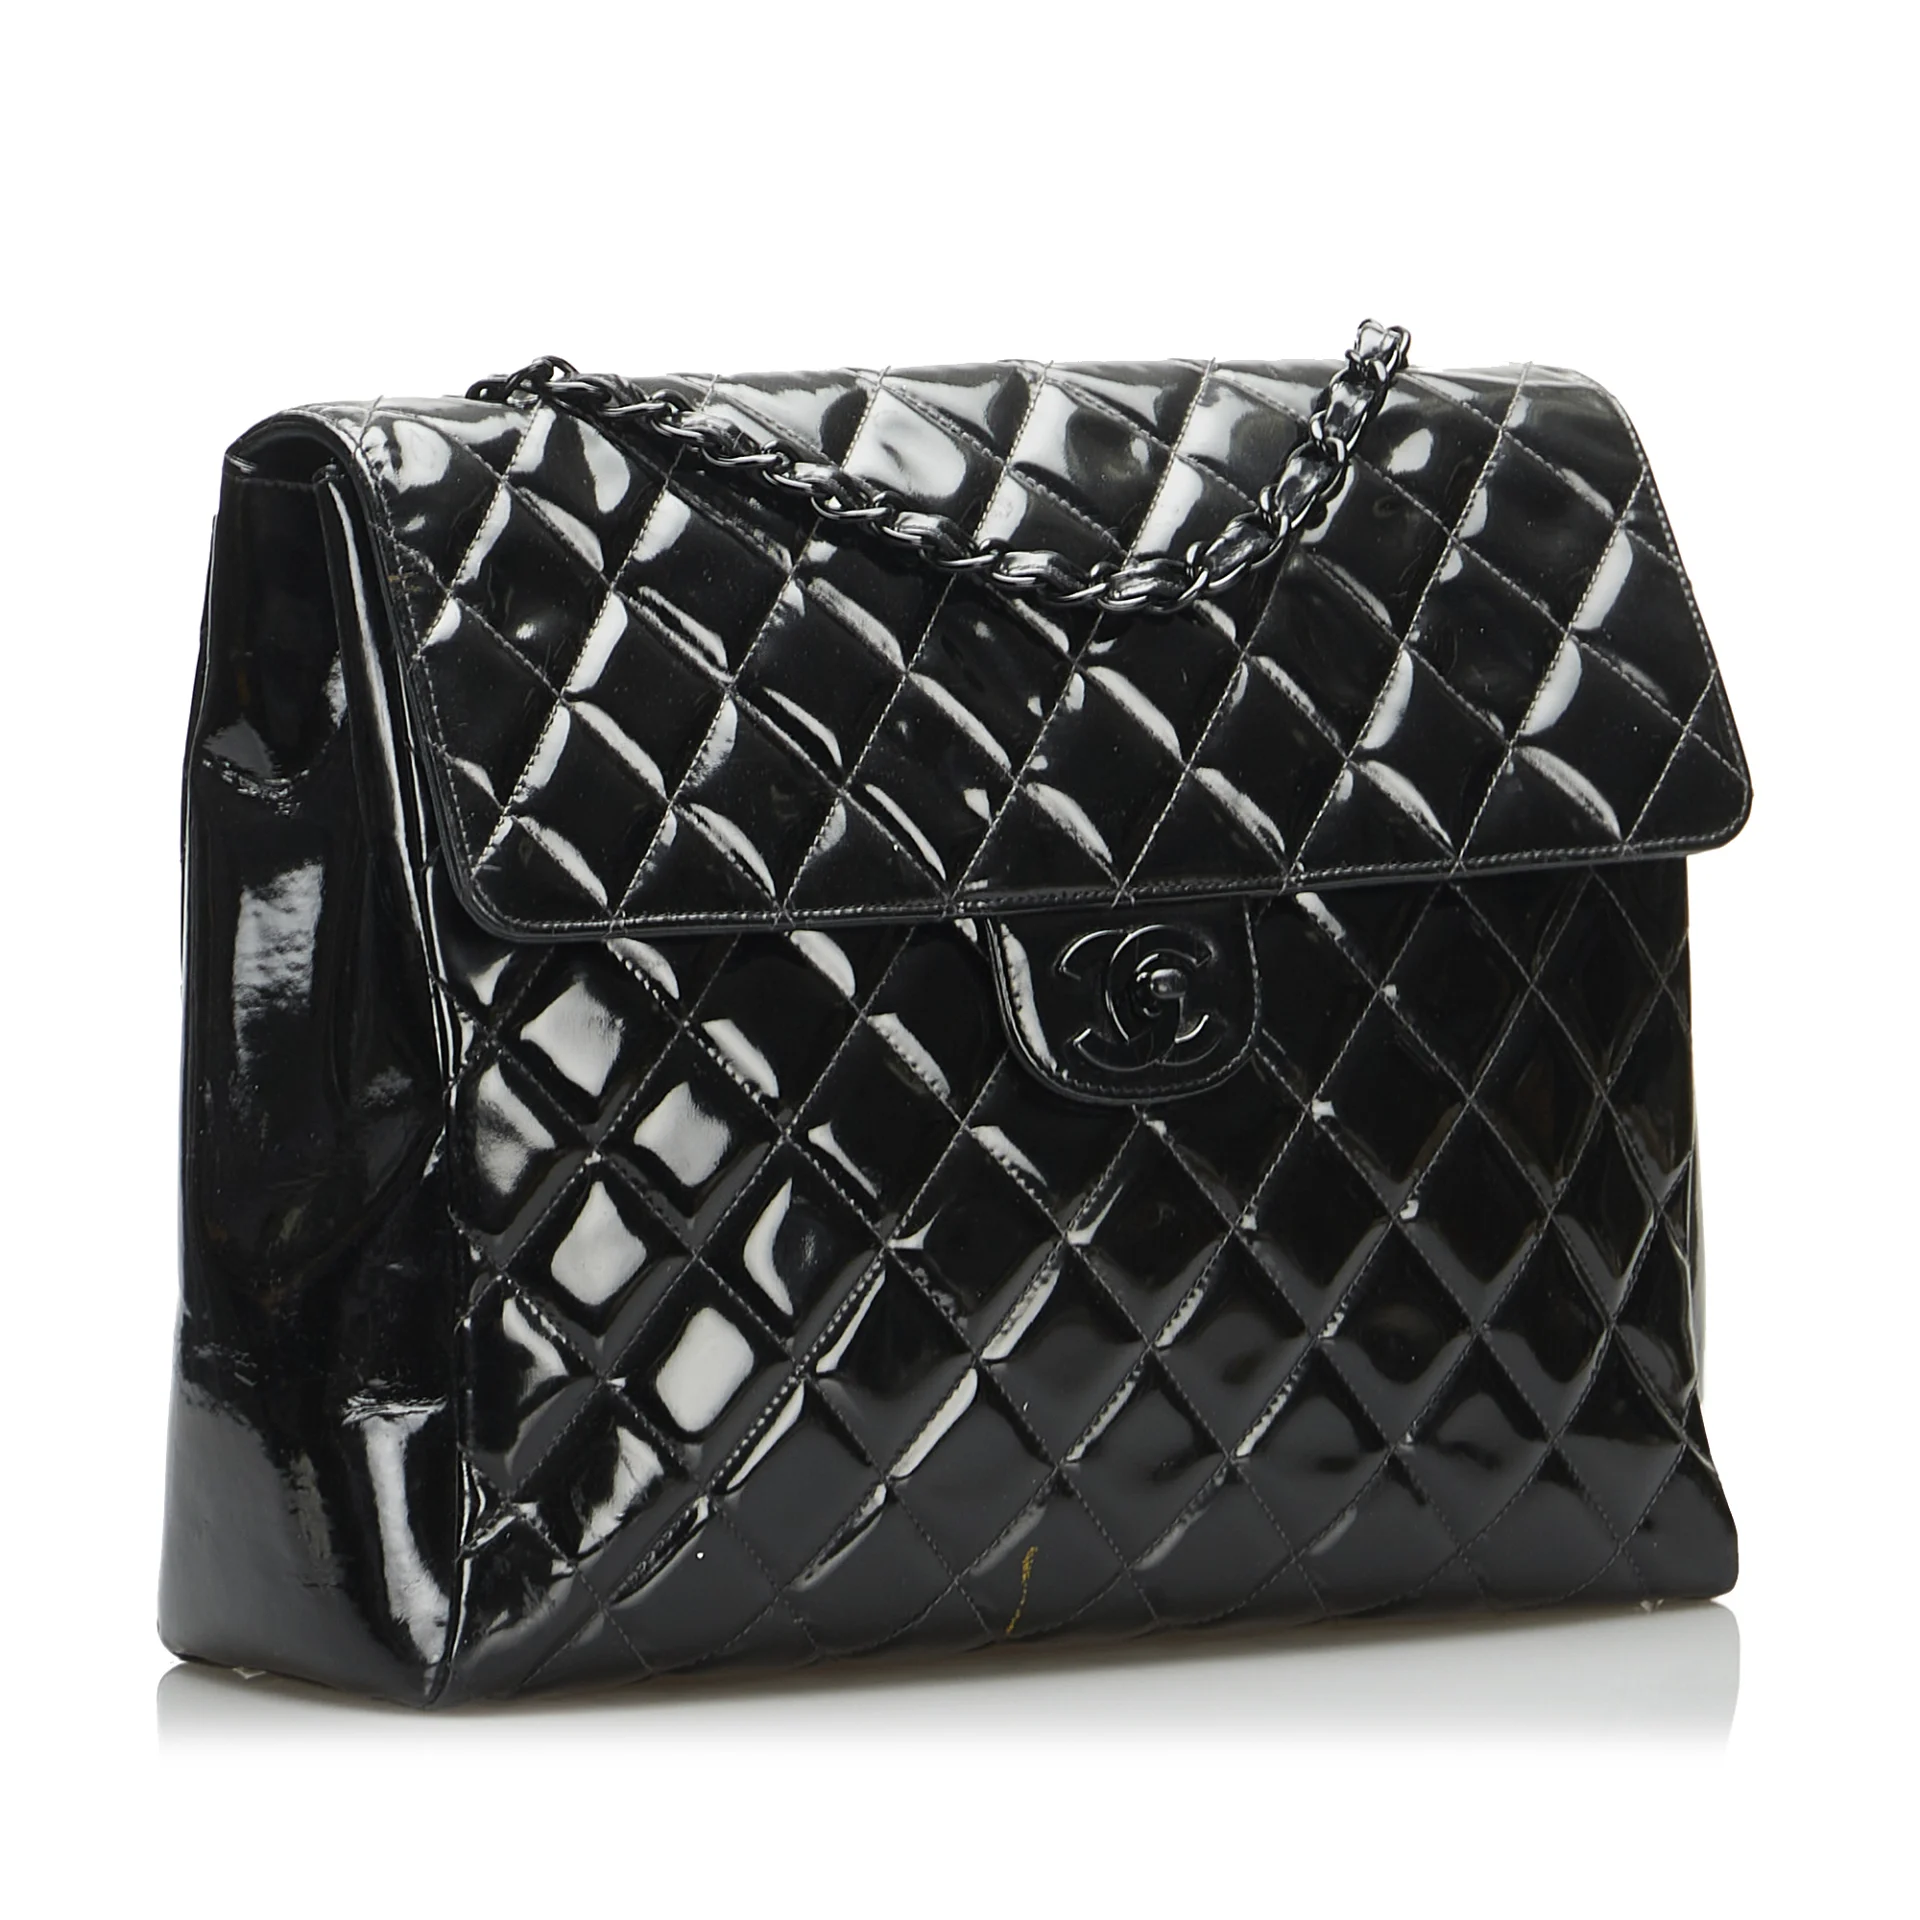 Chanel So Black Matelasse Patent Leather Single Flap Bag